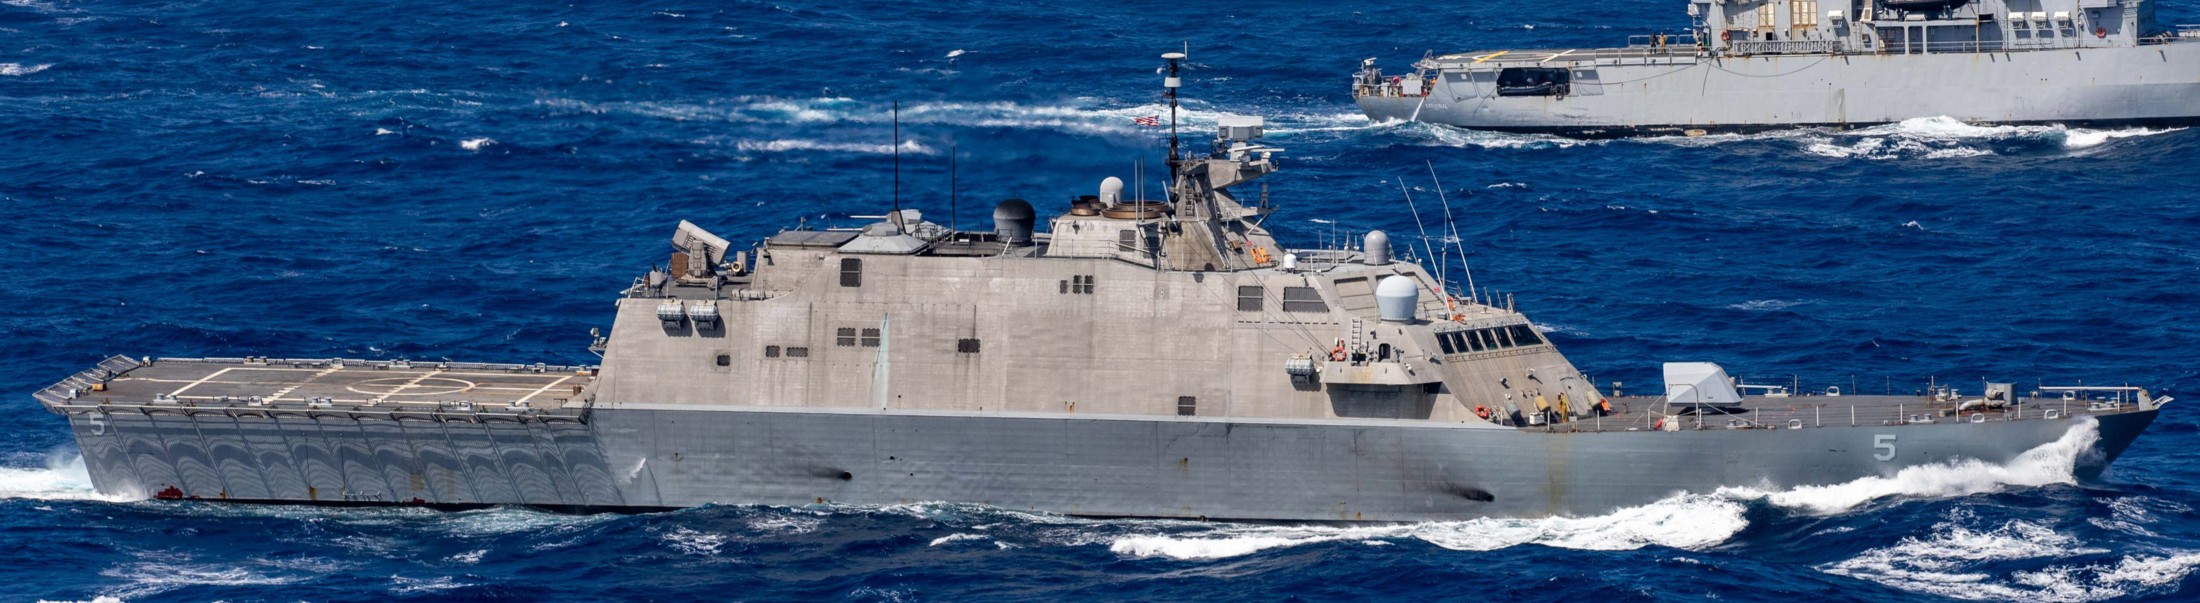 lcs-5 uss milwaukee freedom class littoral combat ship us navy caribbean sea 59